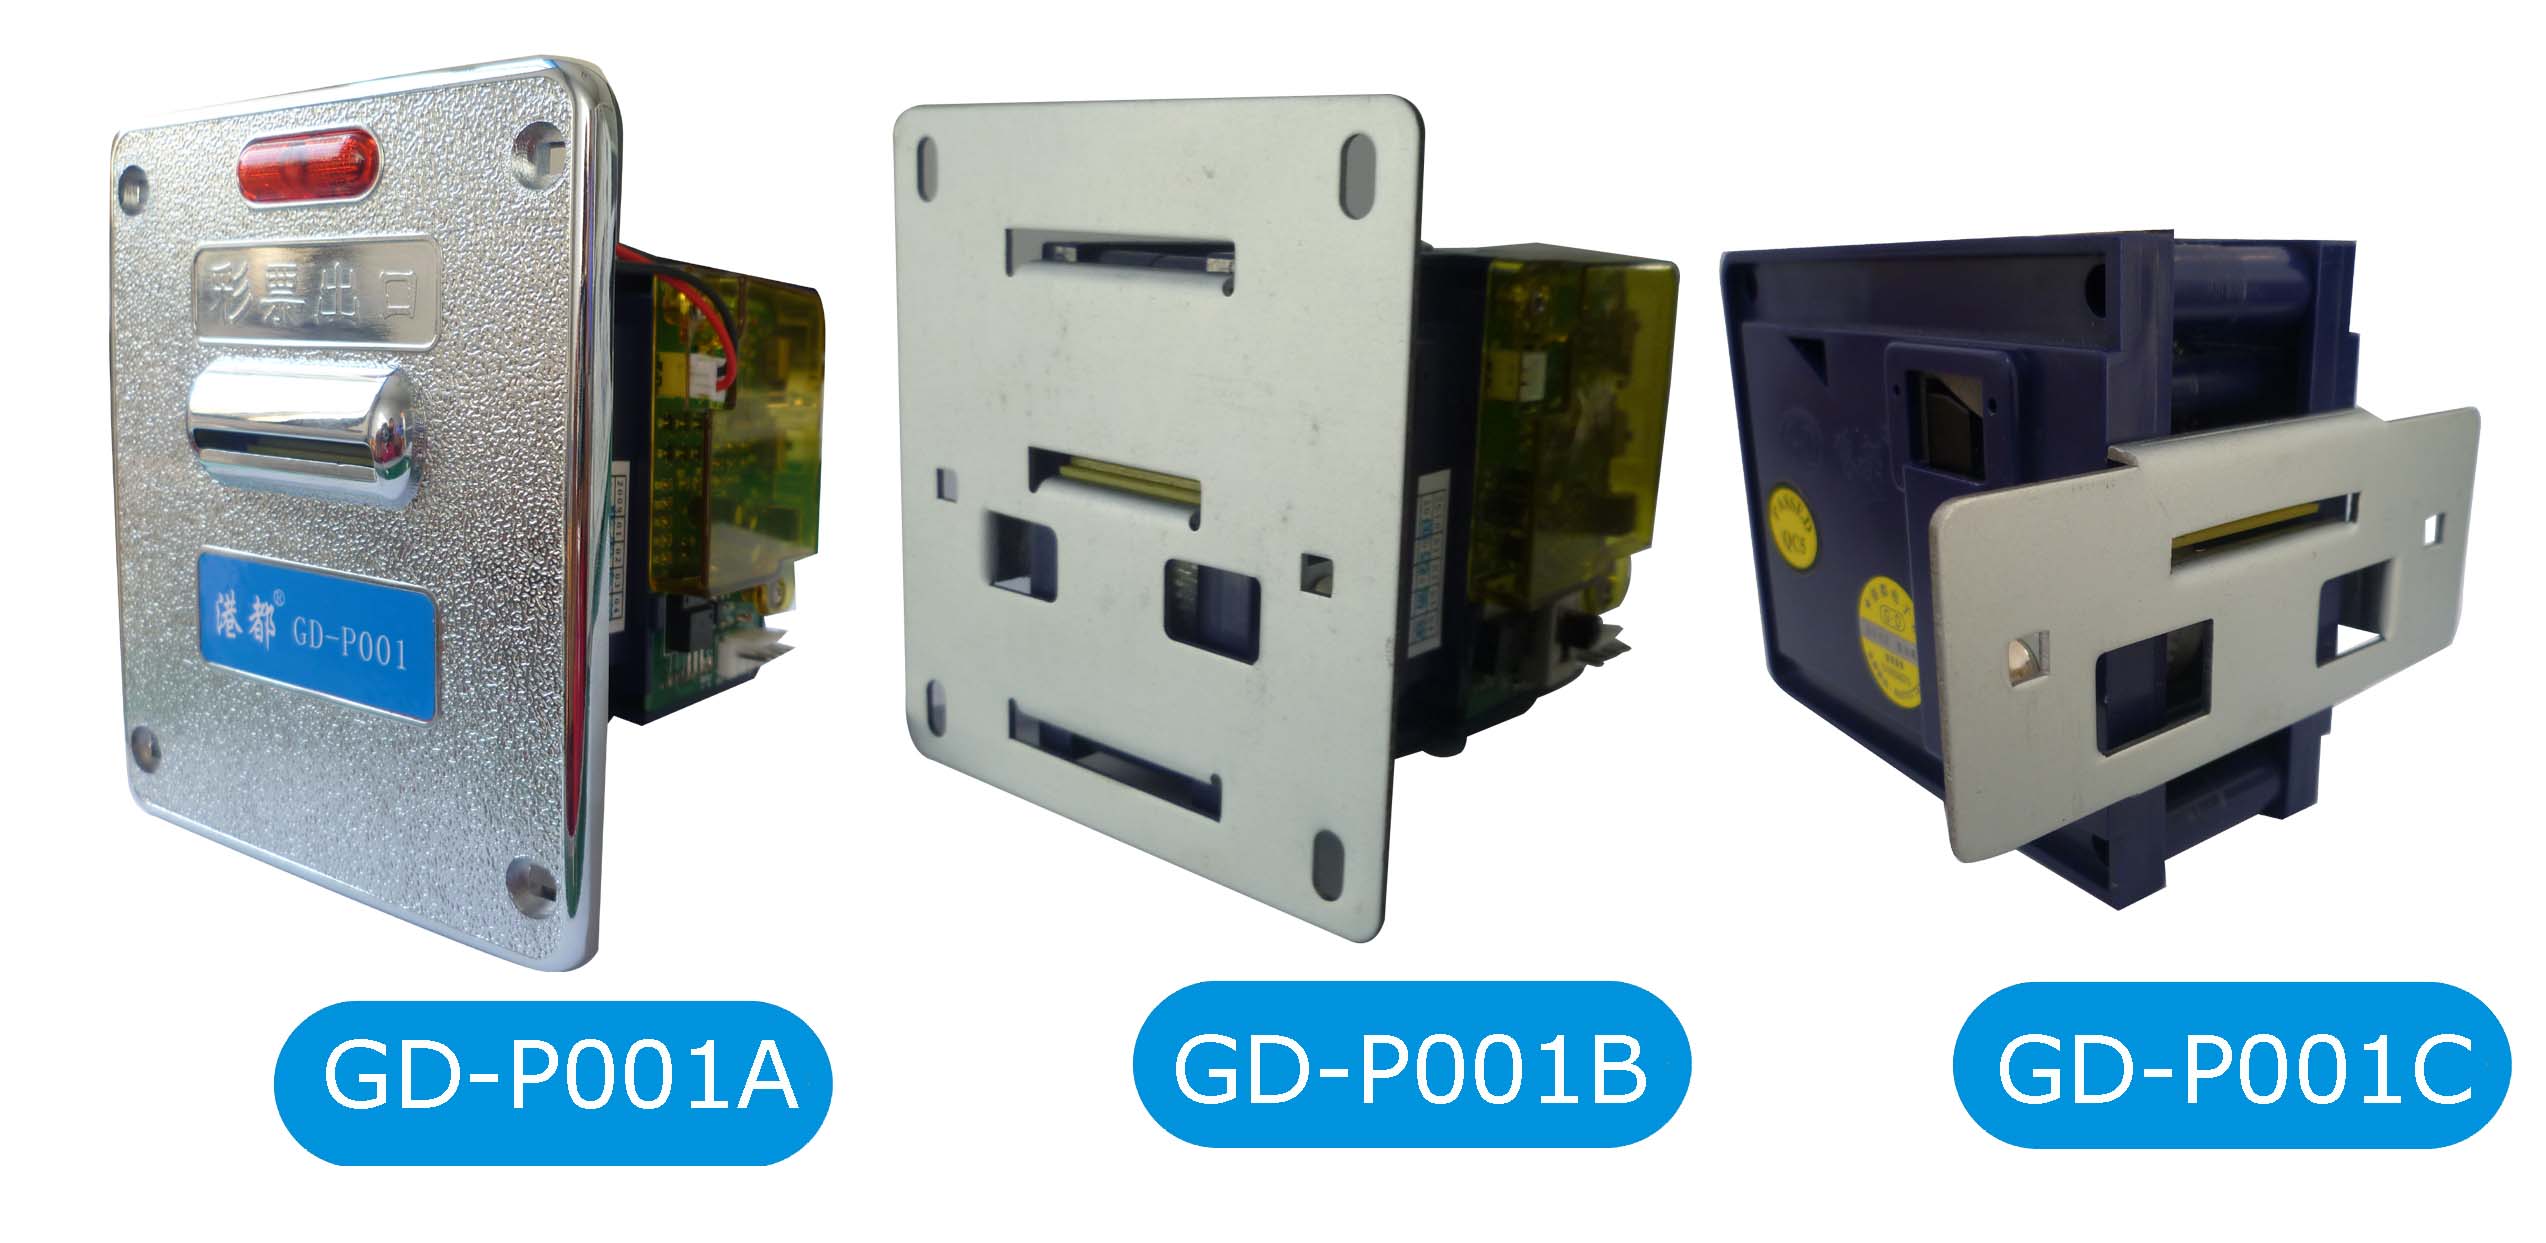 GD-P001C Professional ticket dispenser,tiket redemption machine,lottery machine for game machine